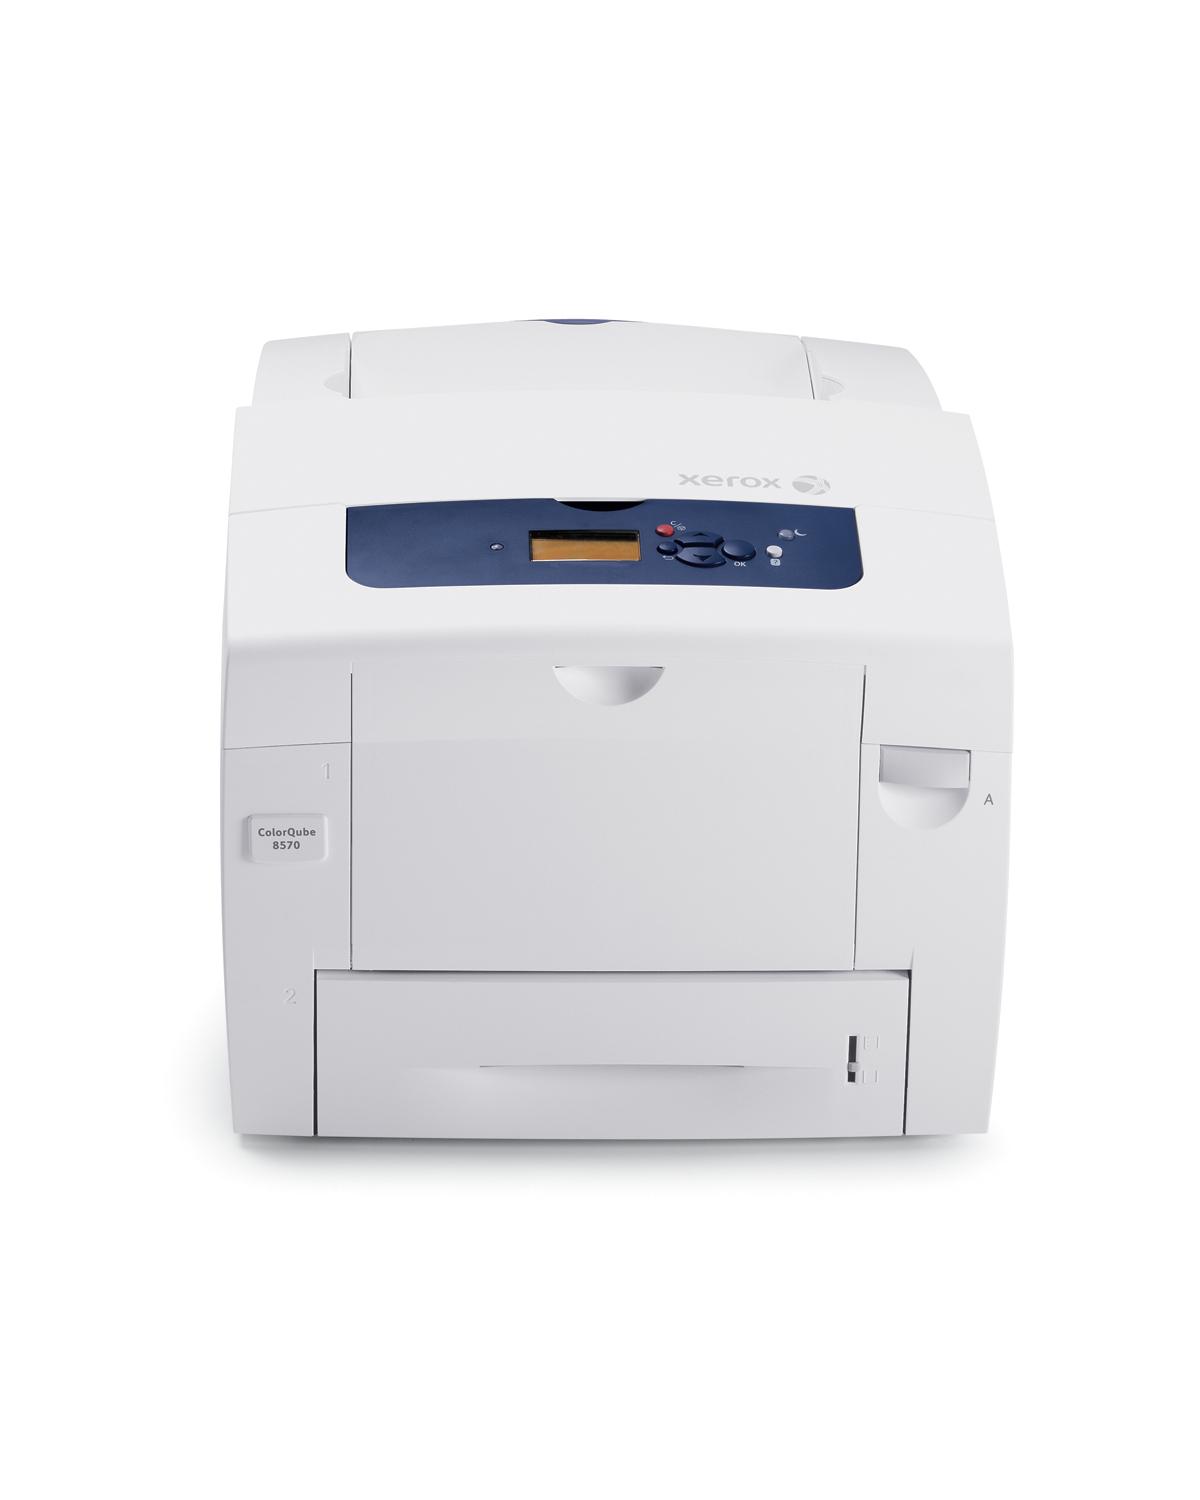 Foto Xerox phaser 8570an, impresora, color, a4, 2400 x 2400 dpi, 40